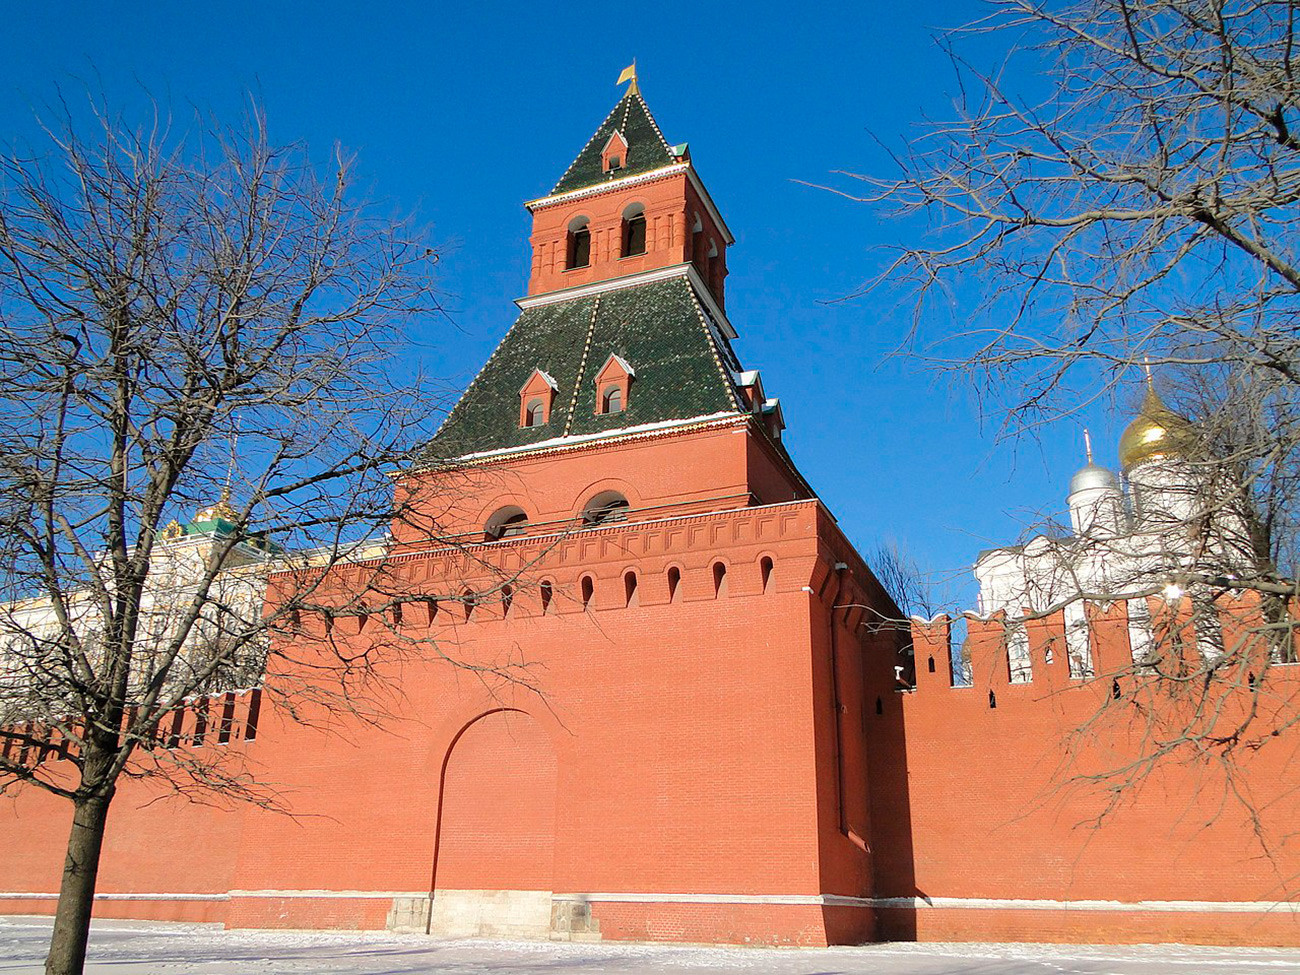 Taynitskaya tower of the Moscow Kremlin